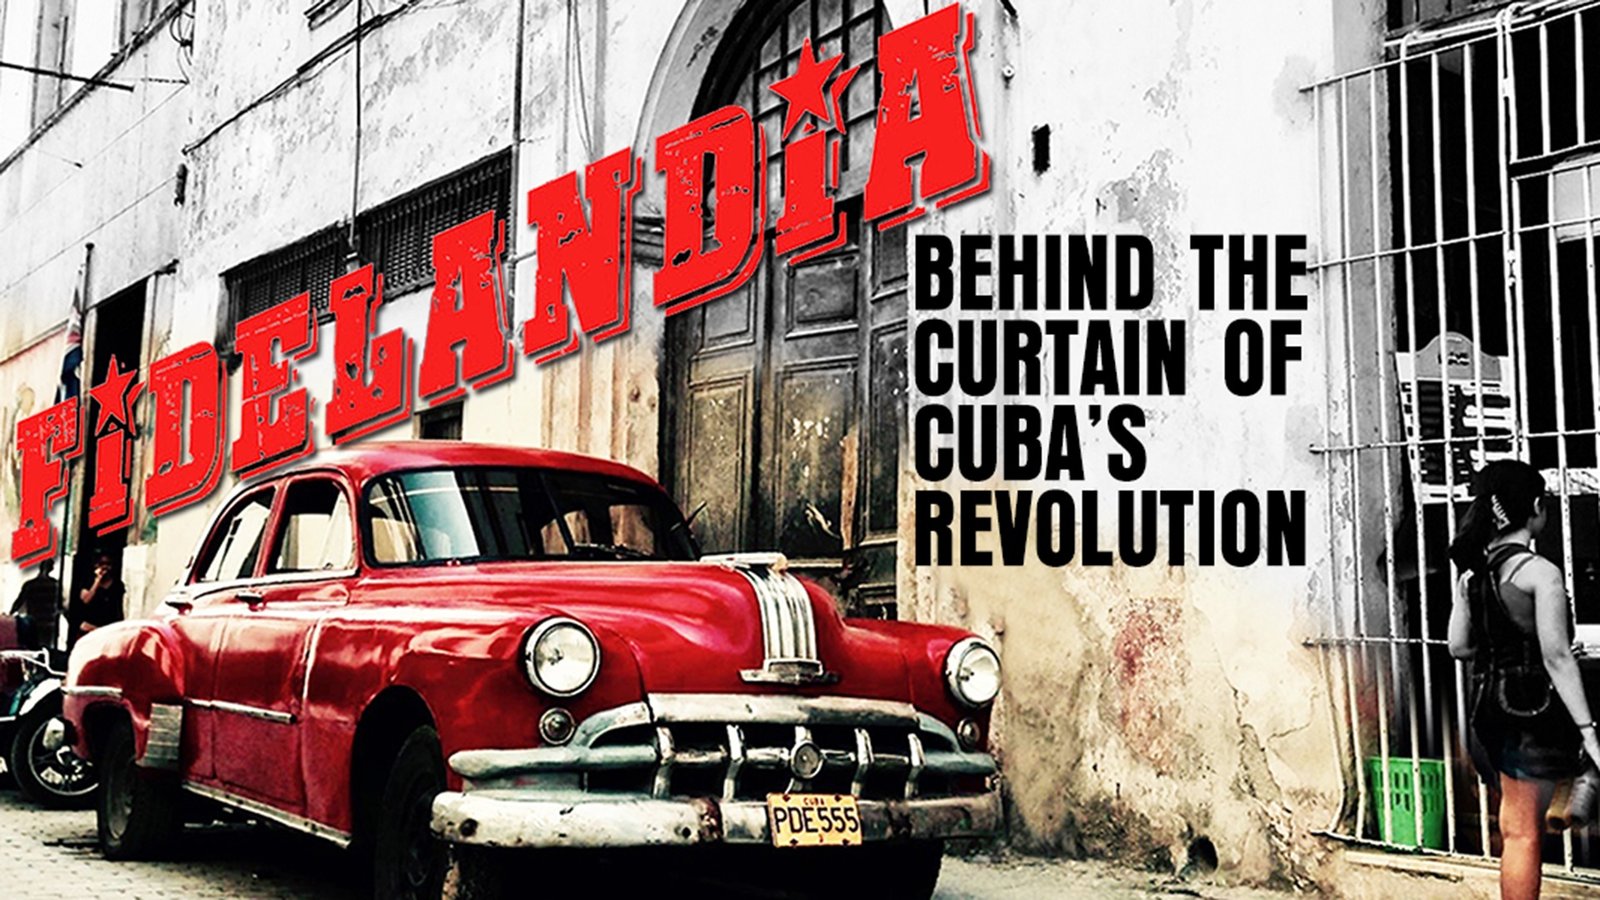 Fidelandia - Behind the Curtain of Cuba's Revolution